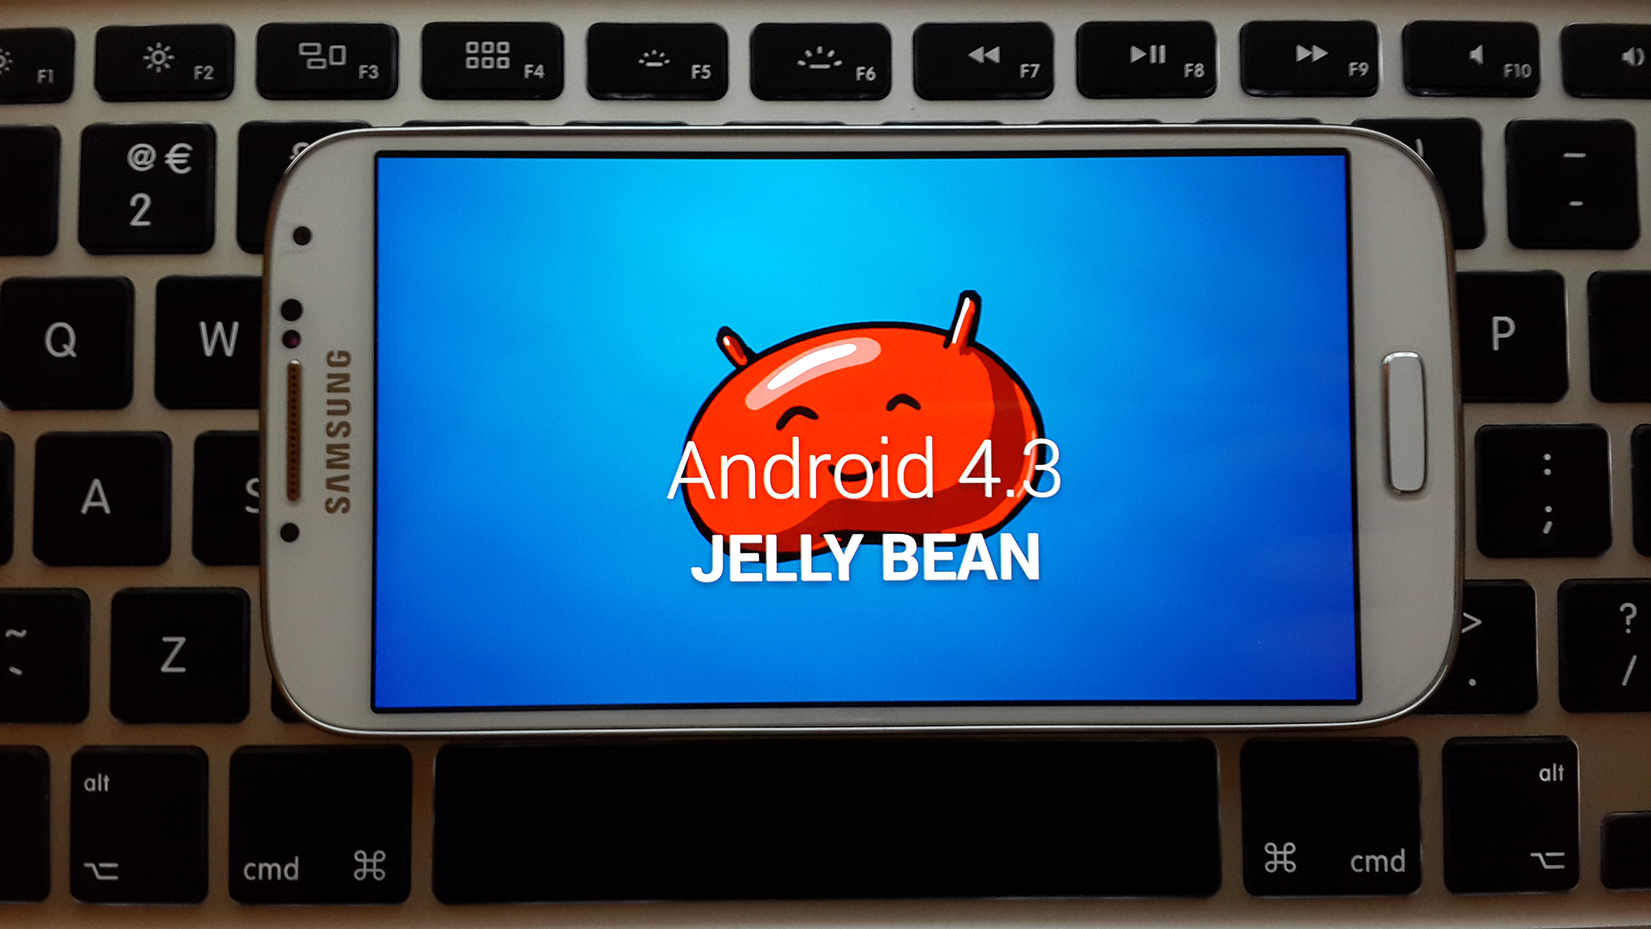 GalaxyS4-Android4.3